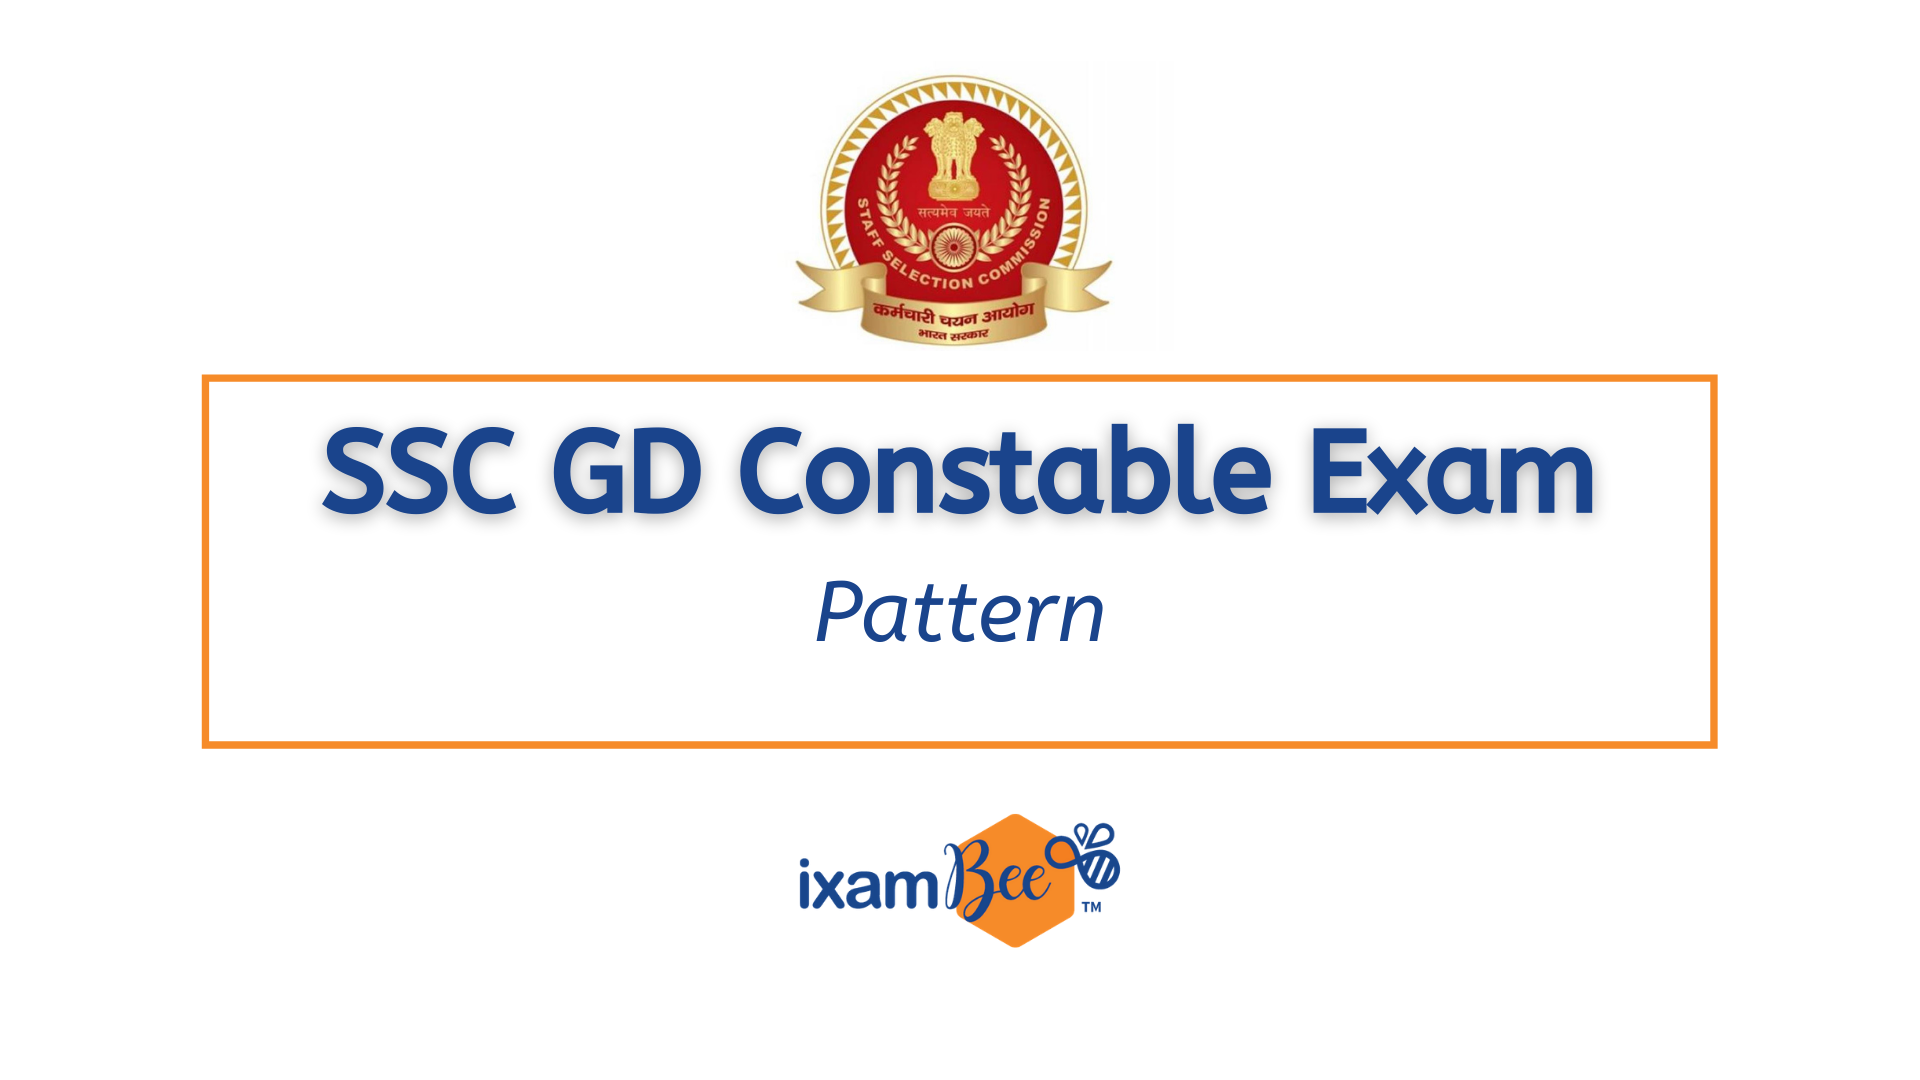 SSC GD Constable Exam Pattern